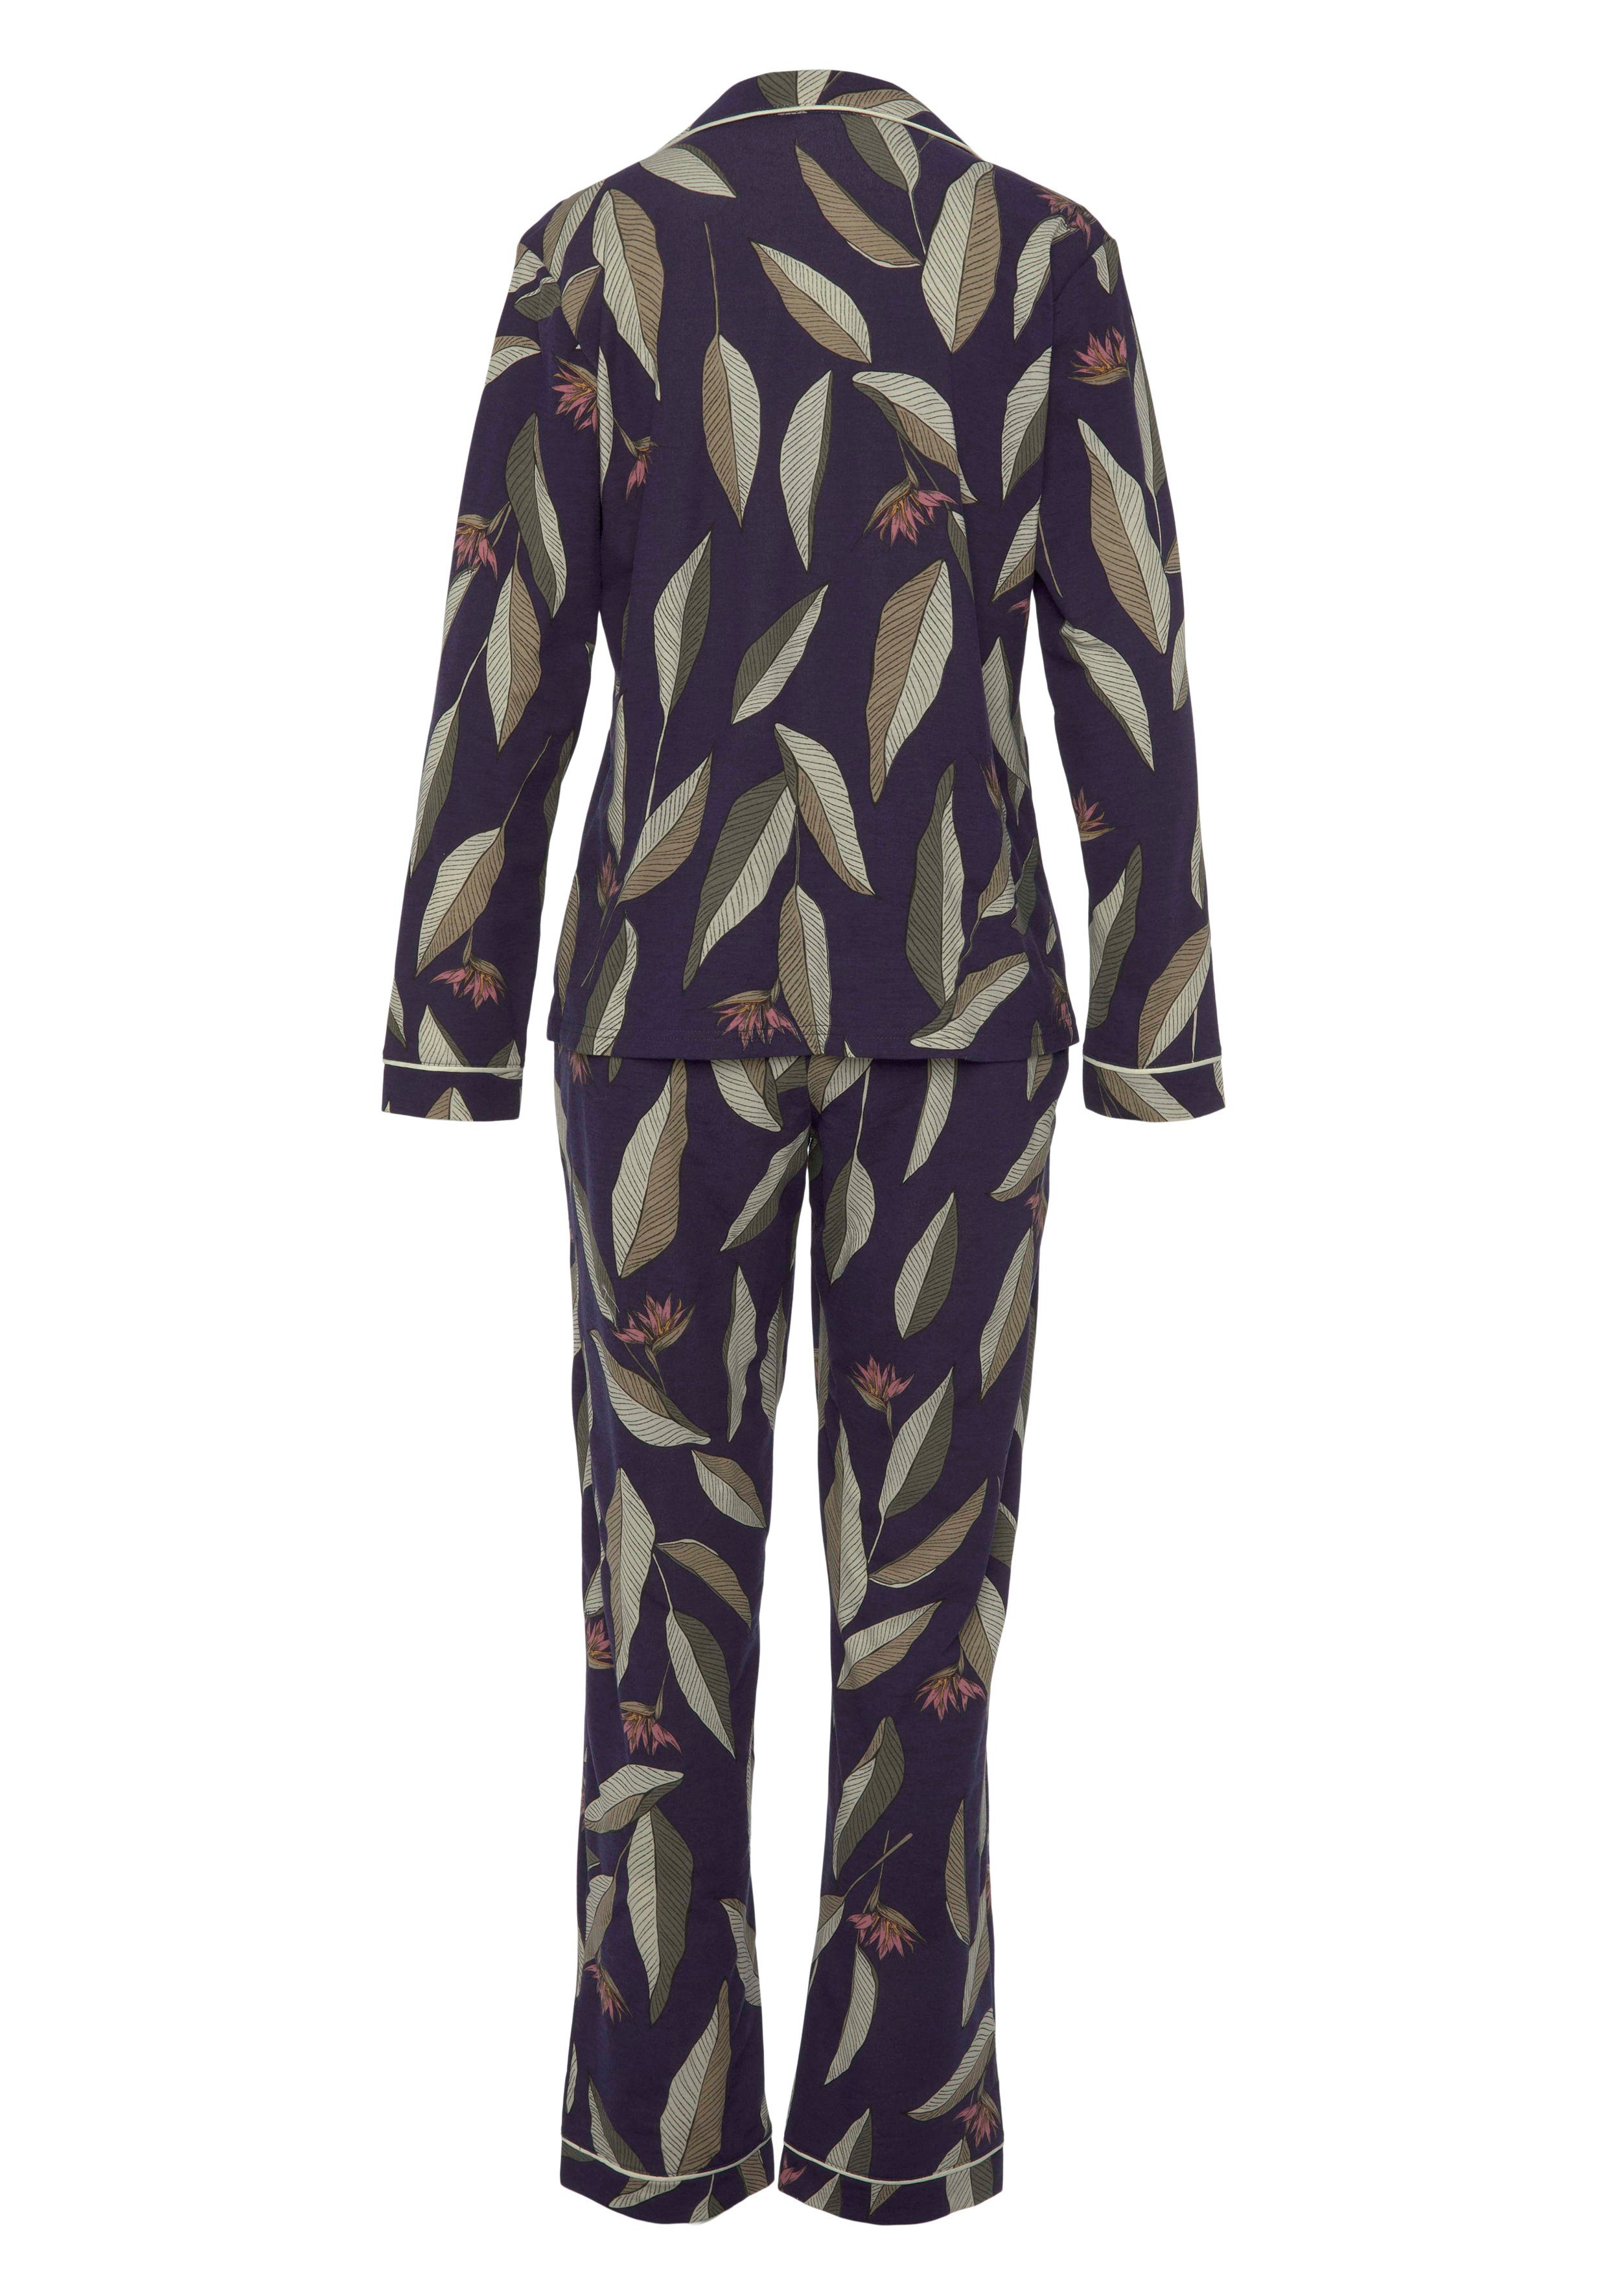 tlg) Pyjama LASCANA dunkellila-gemustert klassischen (2 im Schnitt